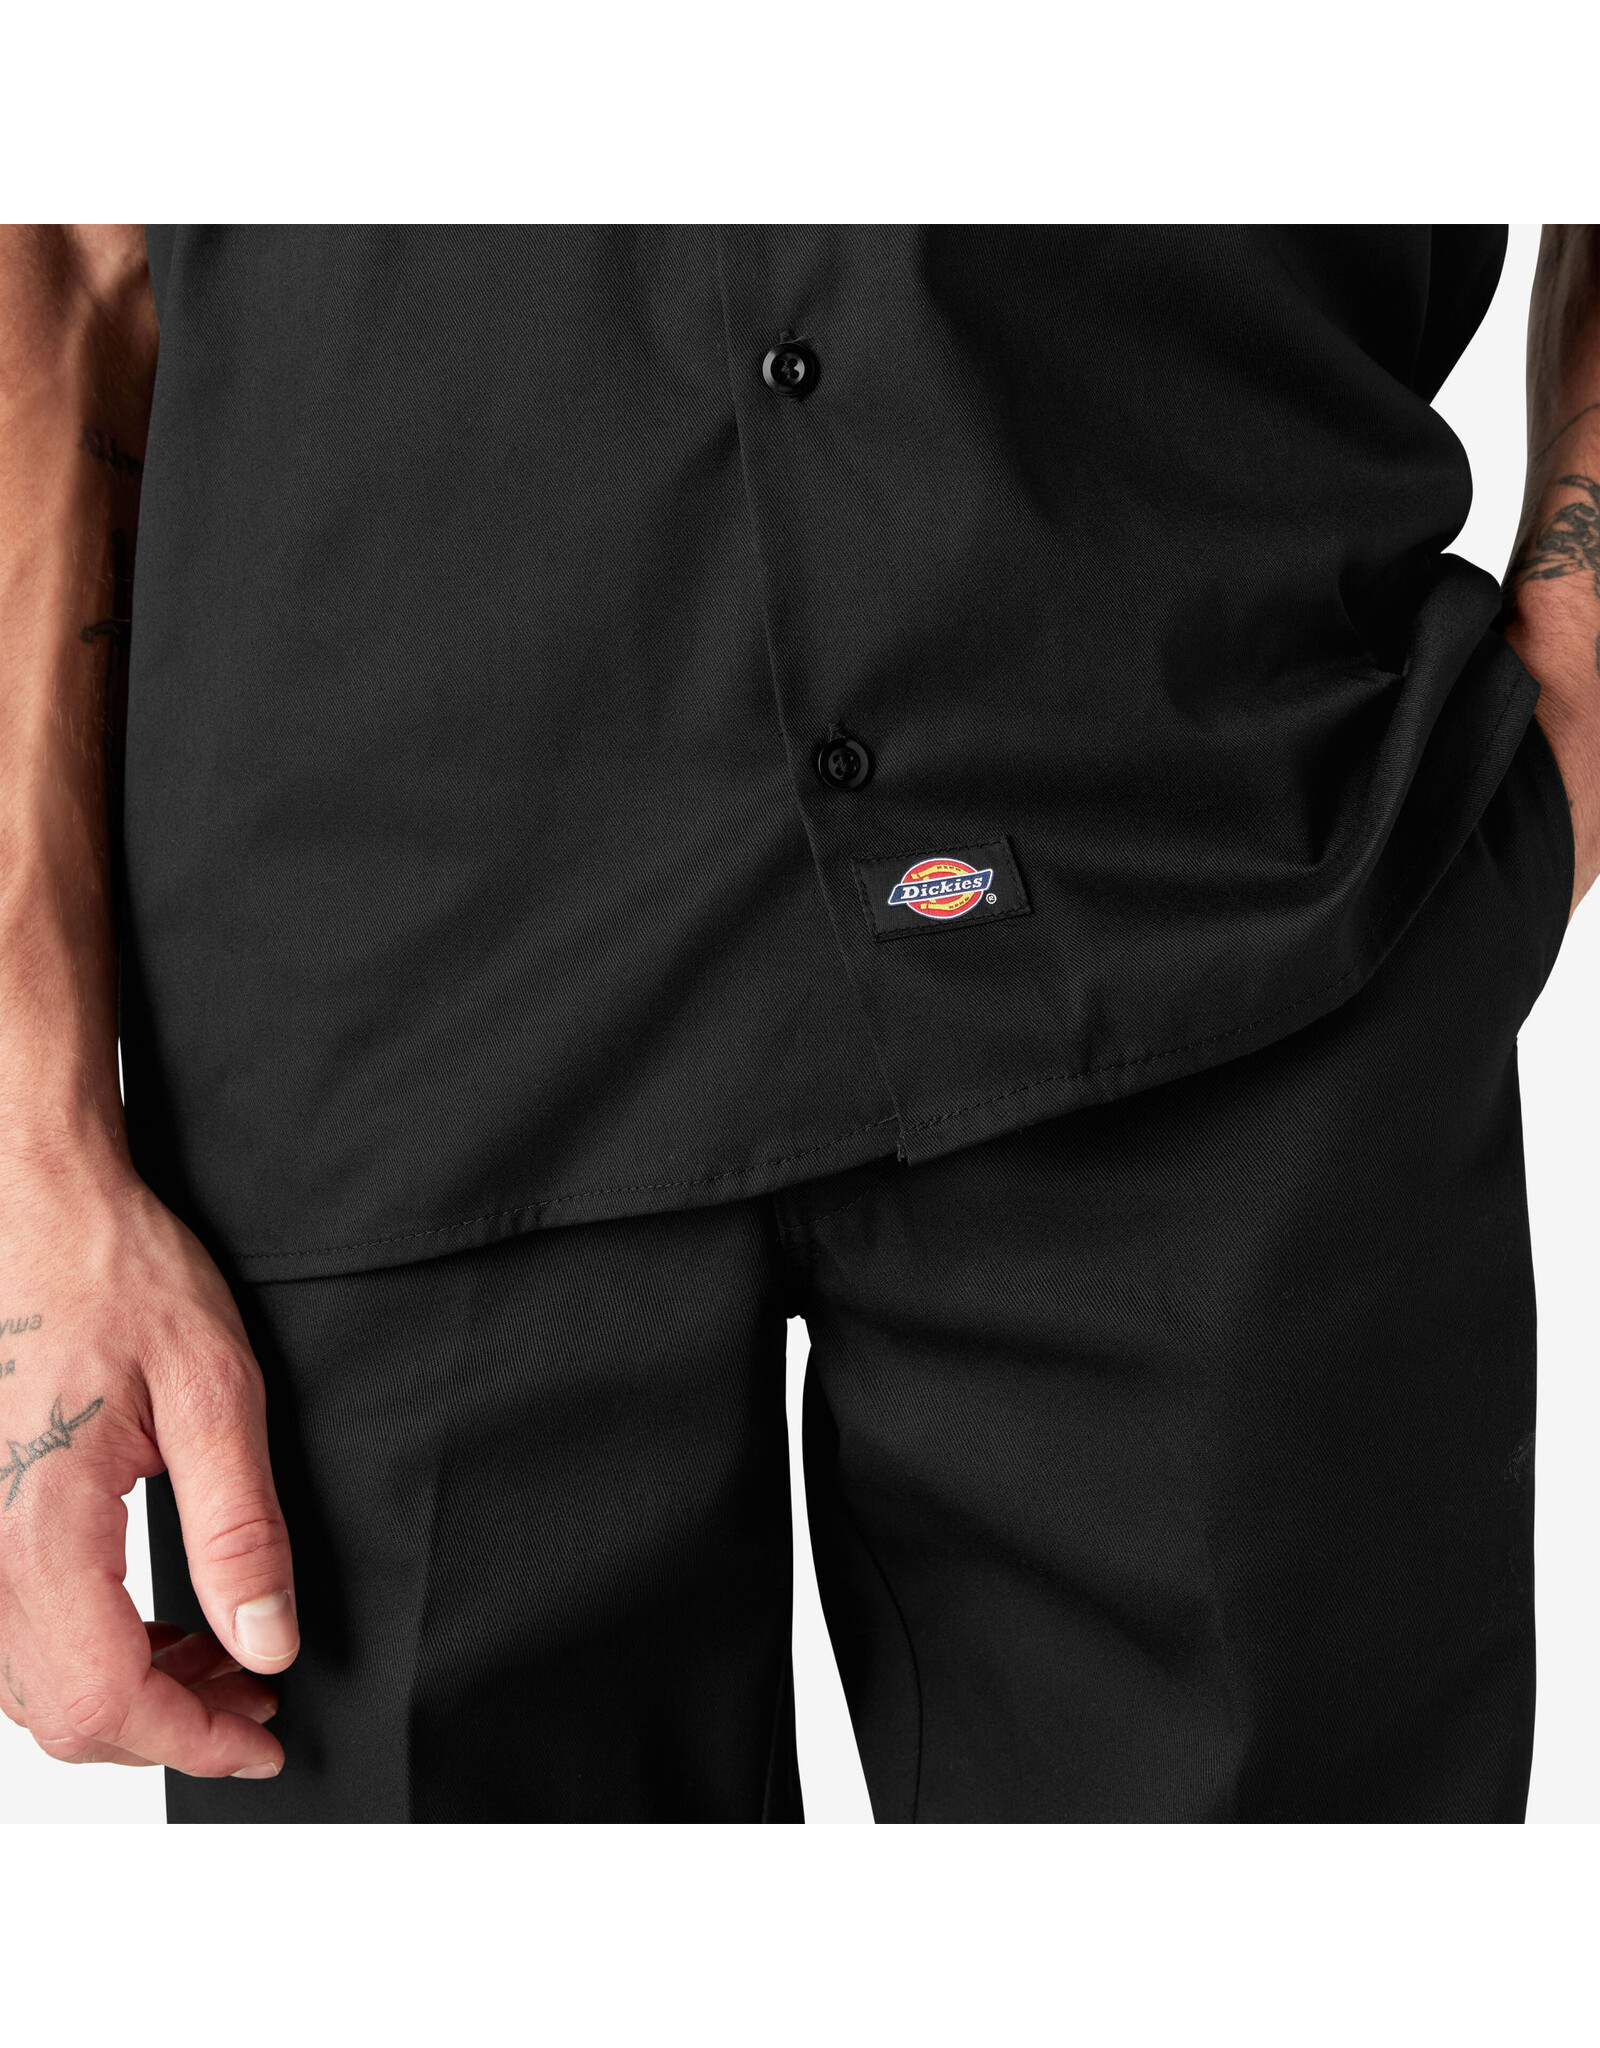 DICKIES Short Sleeve Work Shirt Black Original Fit - 1574BK